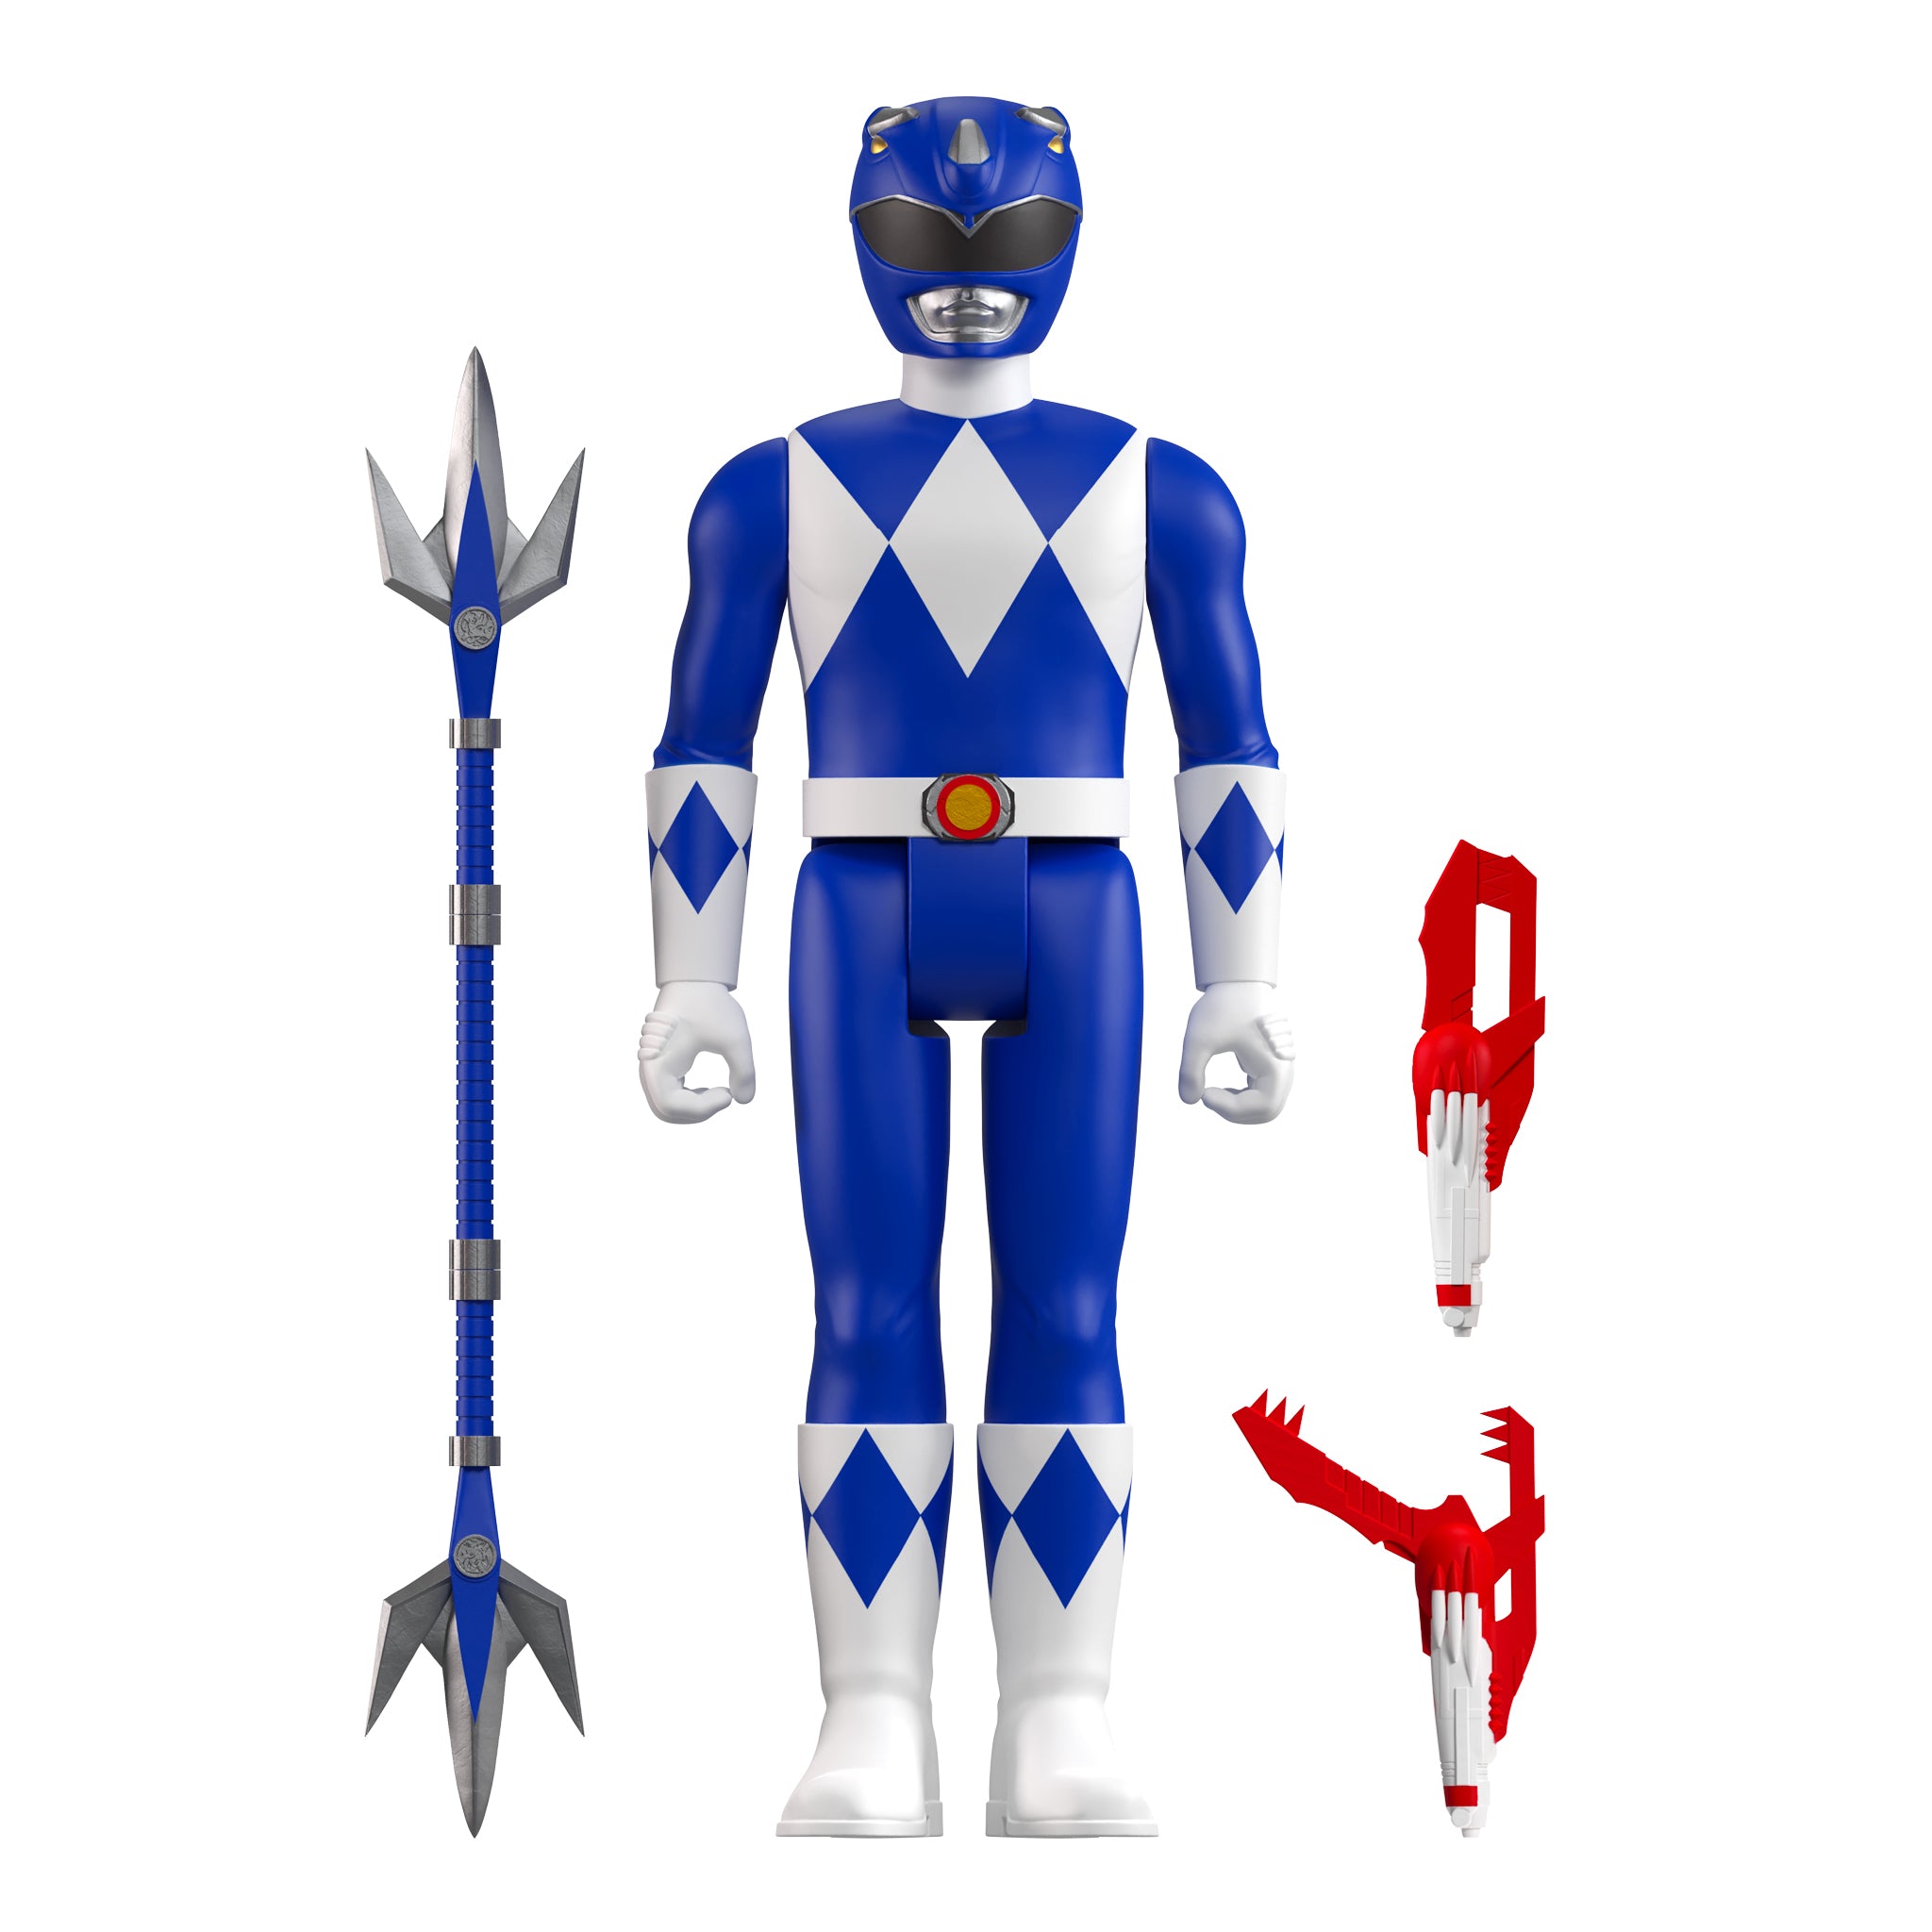 Mighty Morphin Power Rangers ReAction Figure Wave 3 - Blue Ranger